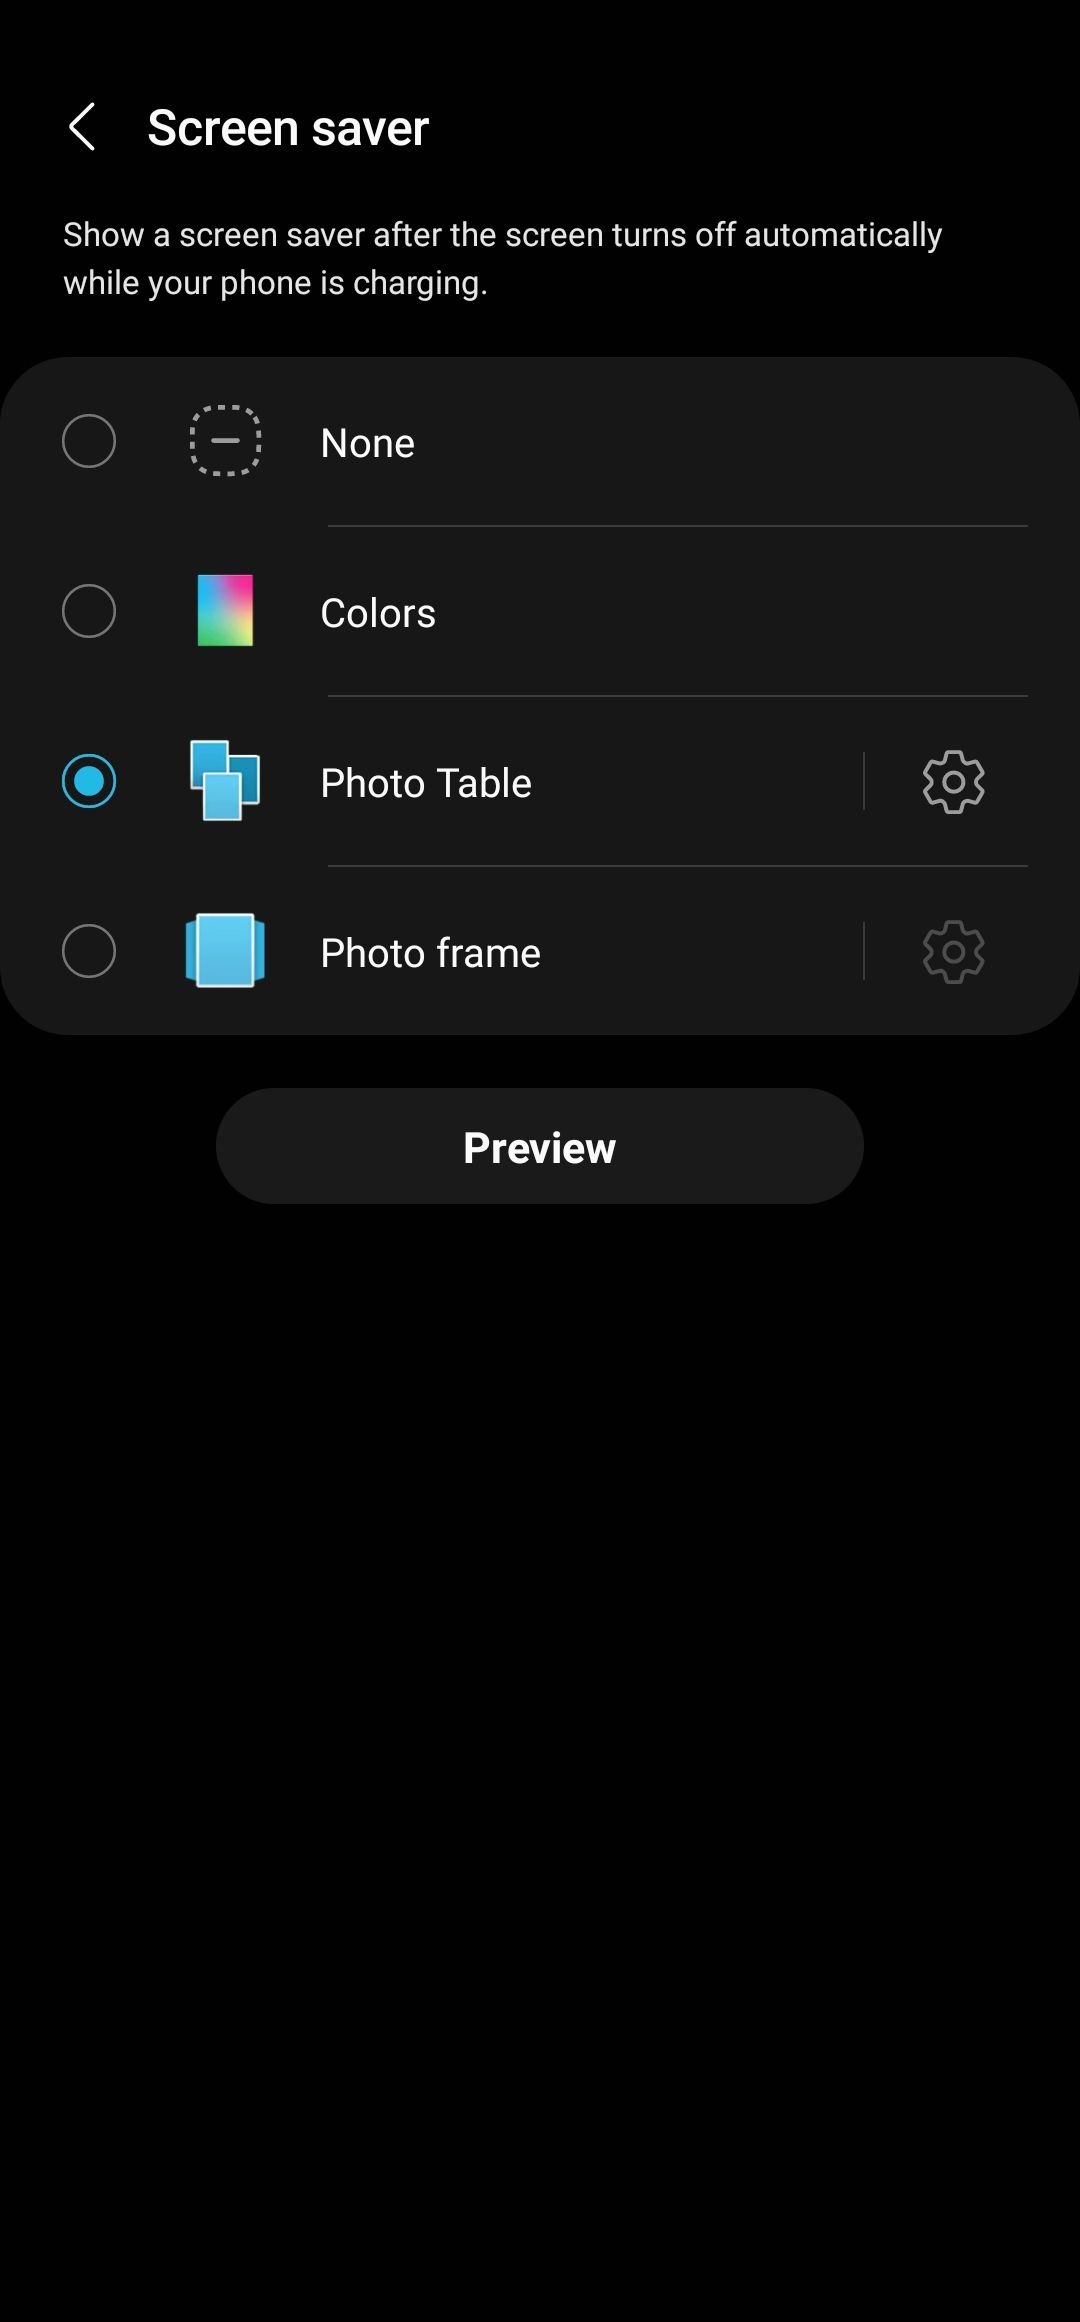 Samsung One UI 4 screen savers